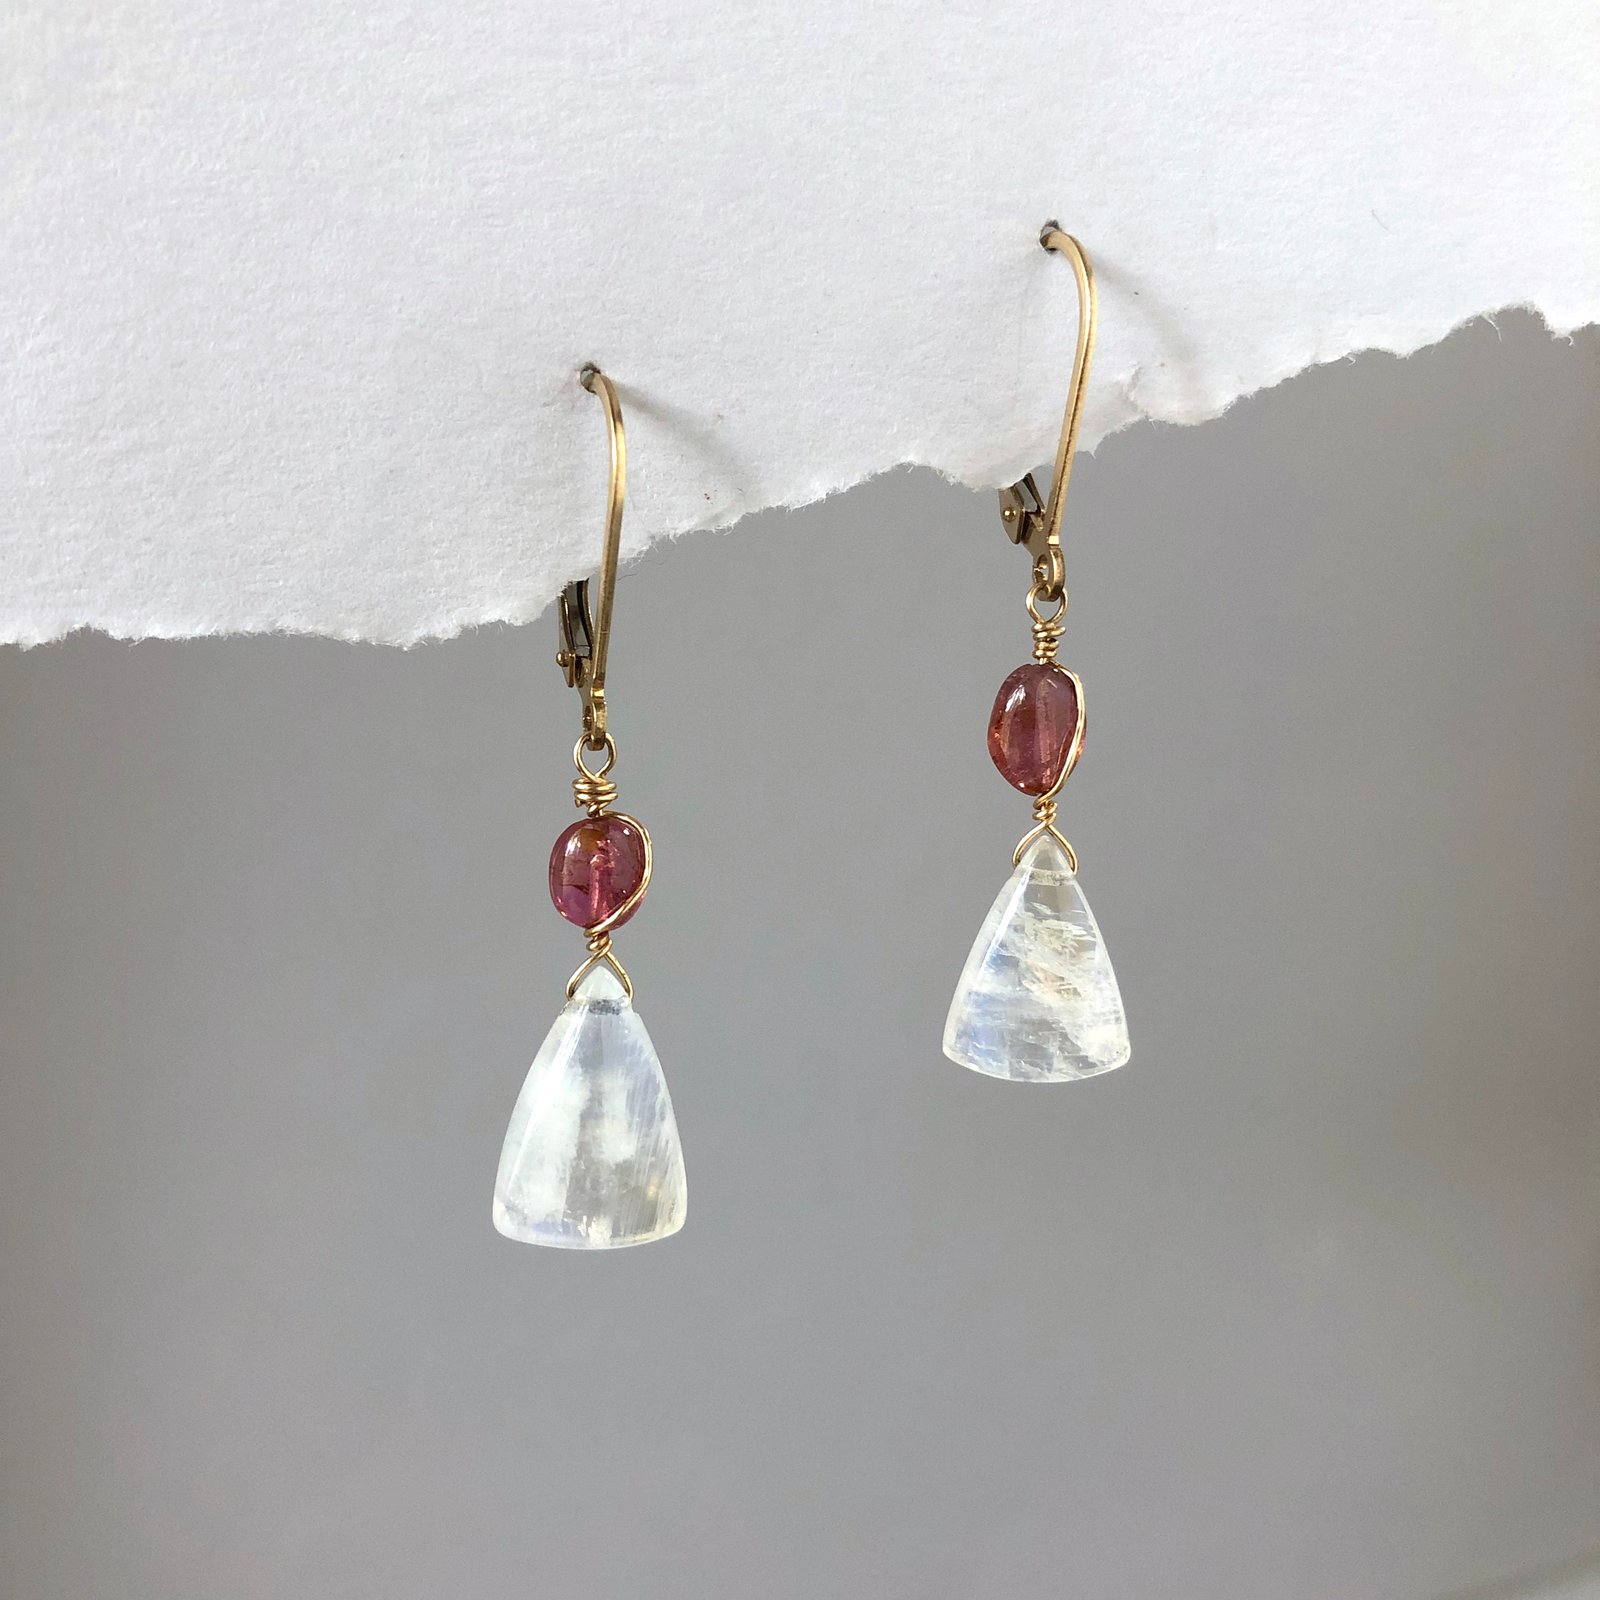 Golden rutile quartz and garnet ear wire chandelier earrings Jewellery Earrings Chandelier Earrings 